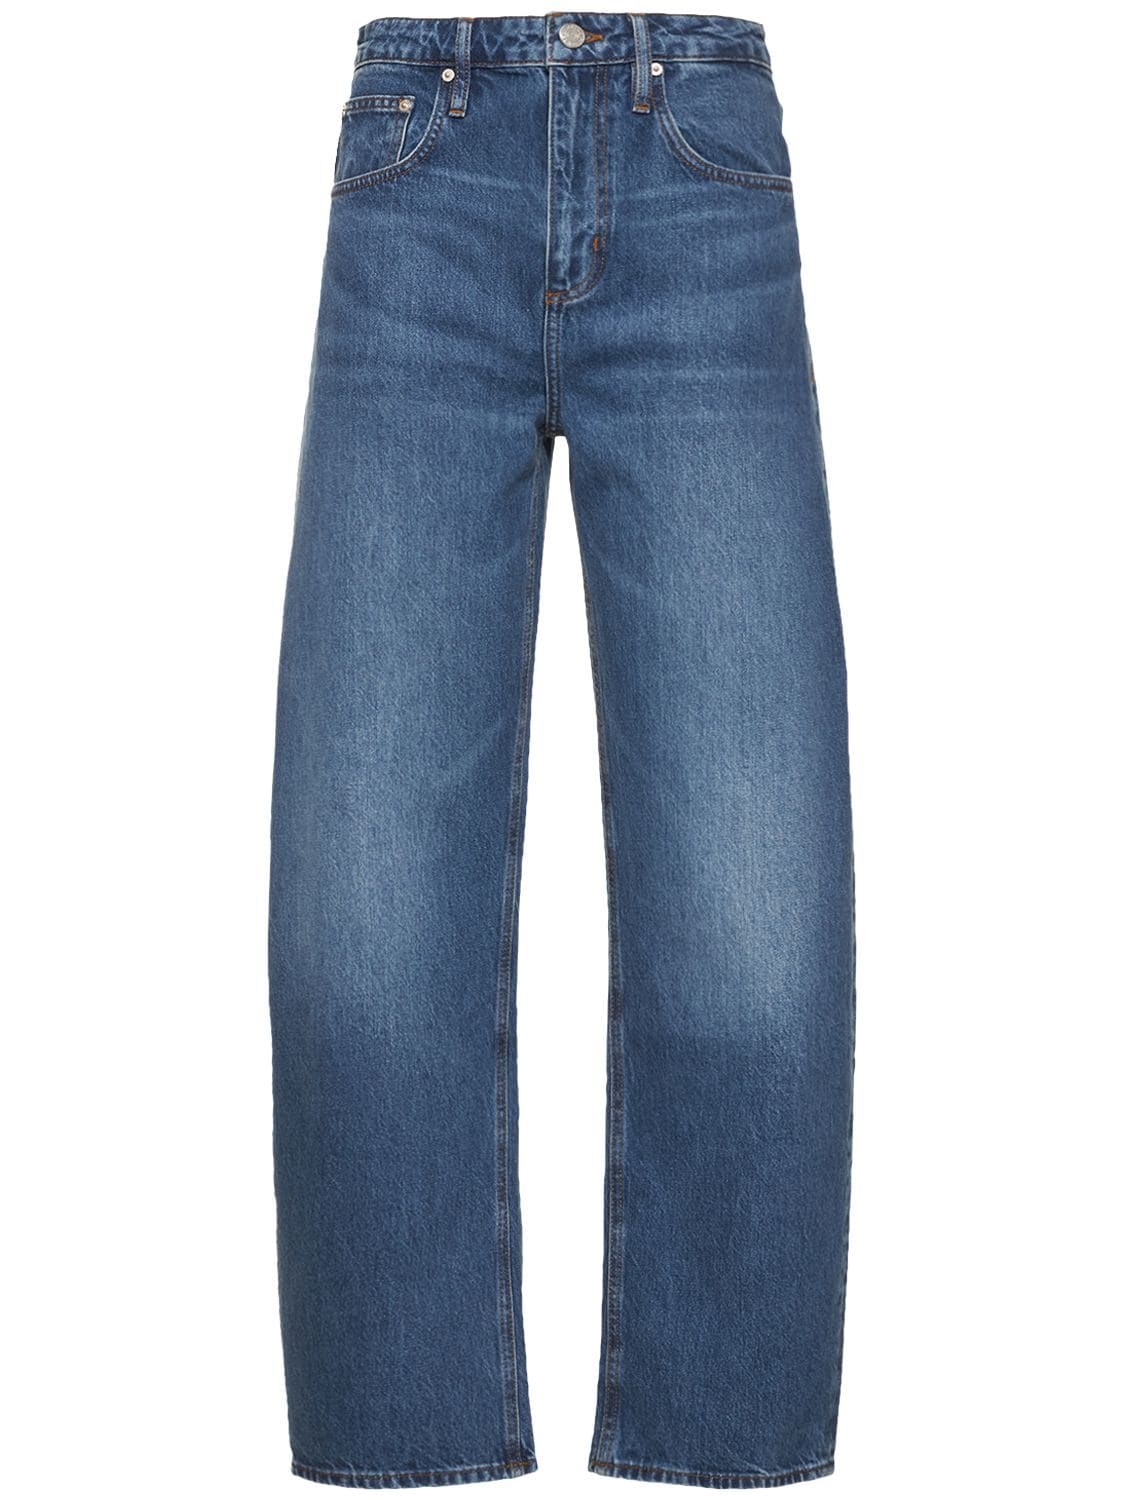 FRAME Long Barrel Jeans | Smart Closet